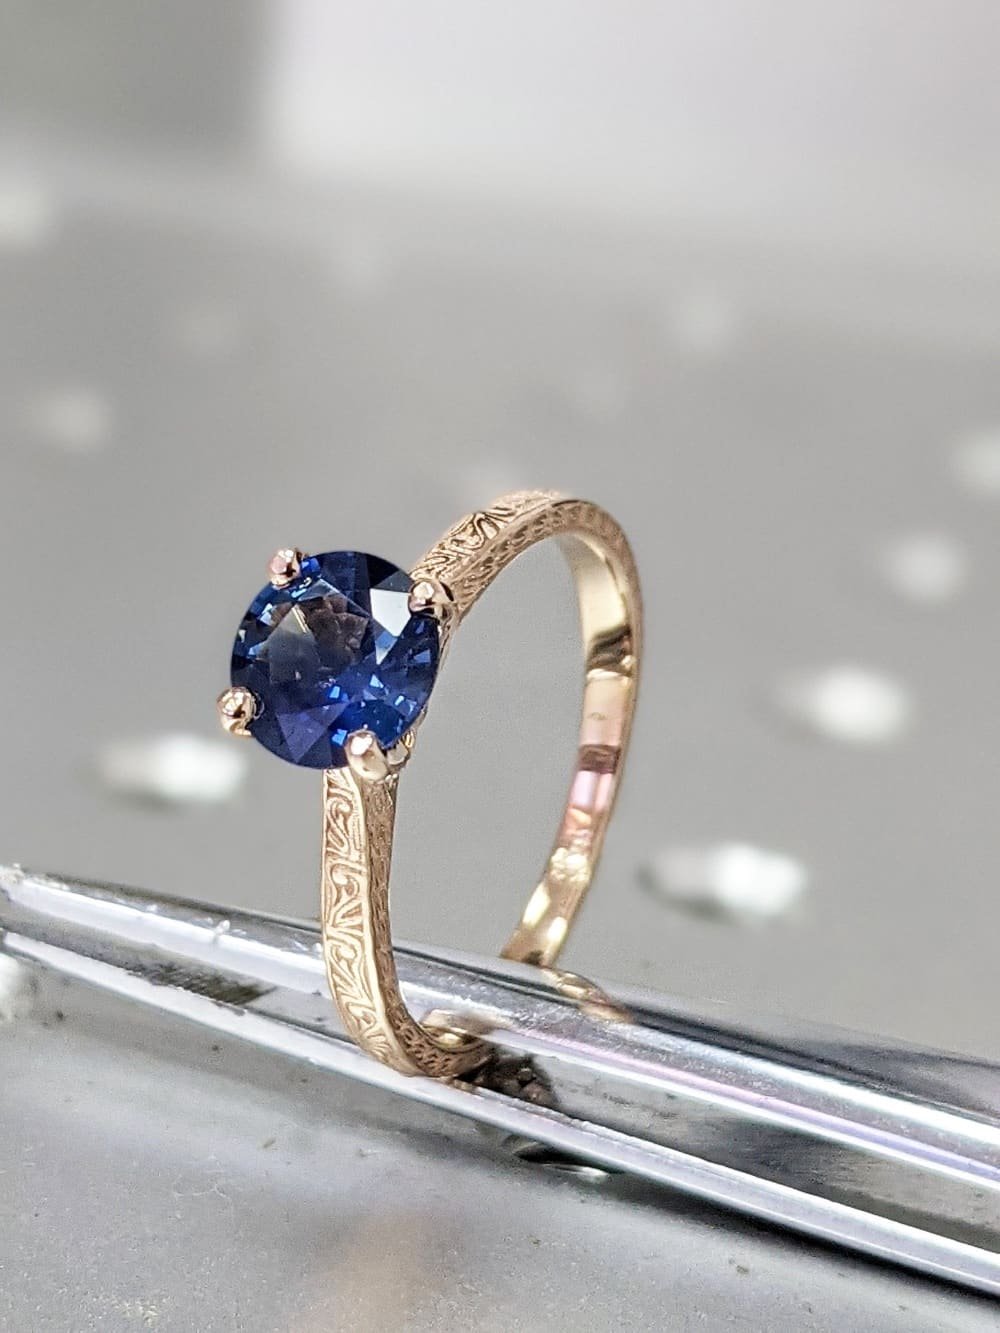 10 Best Colored Gemstone Engagement Rings - International Gem Society